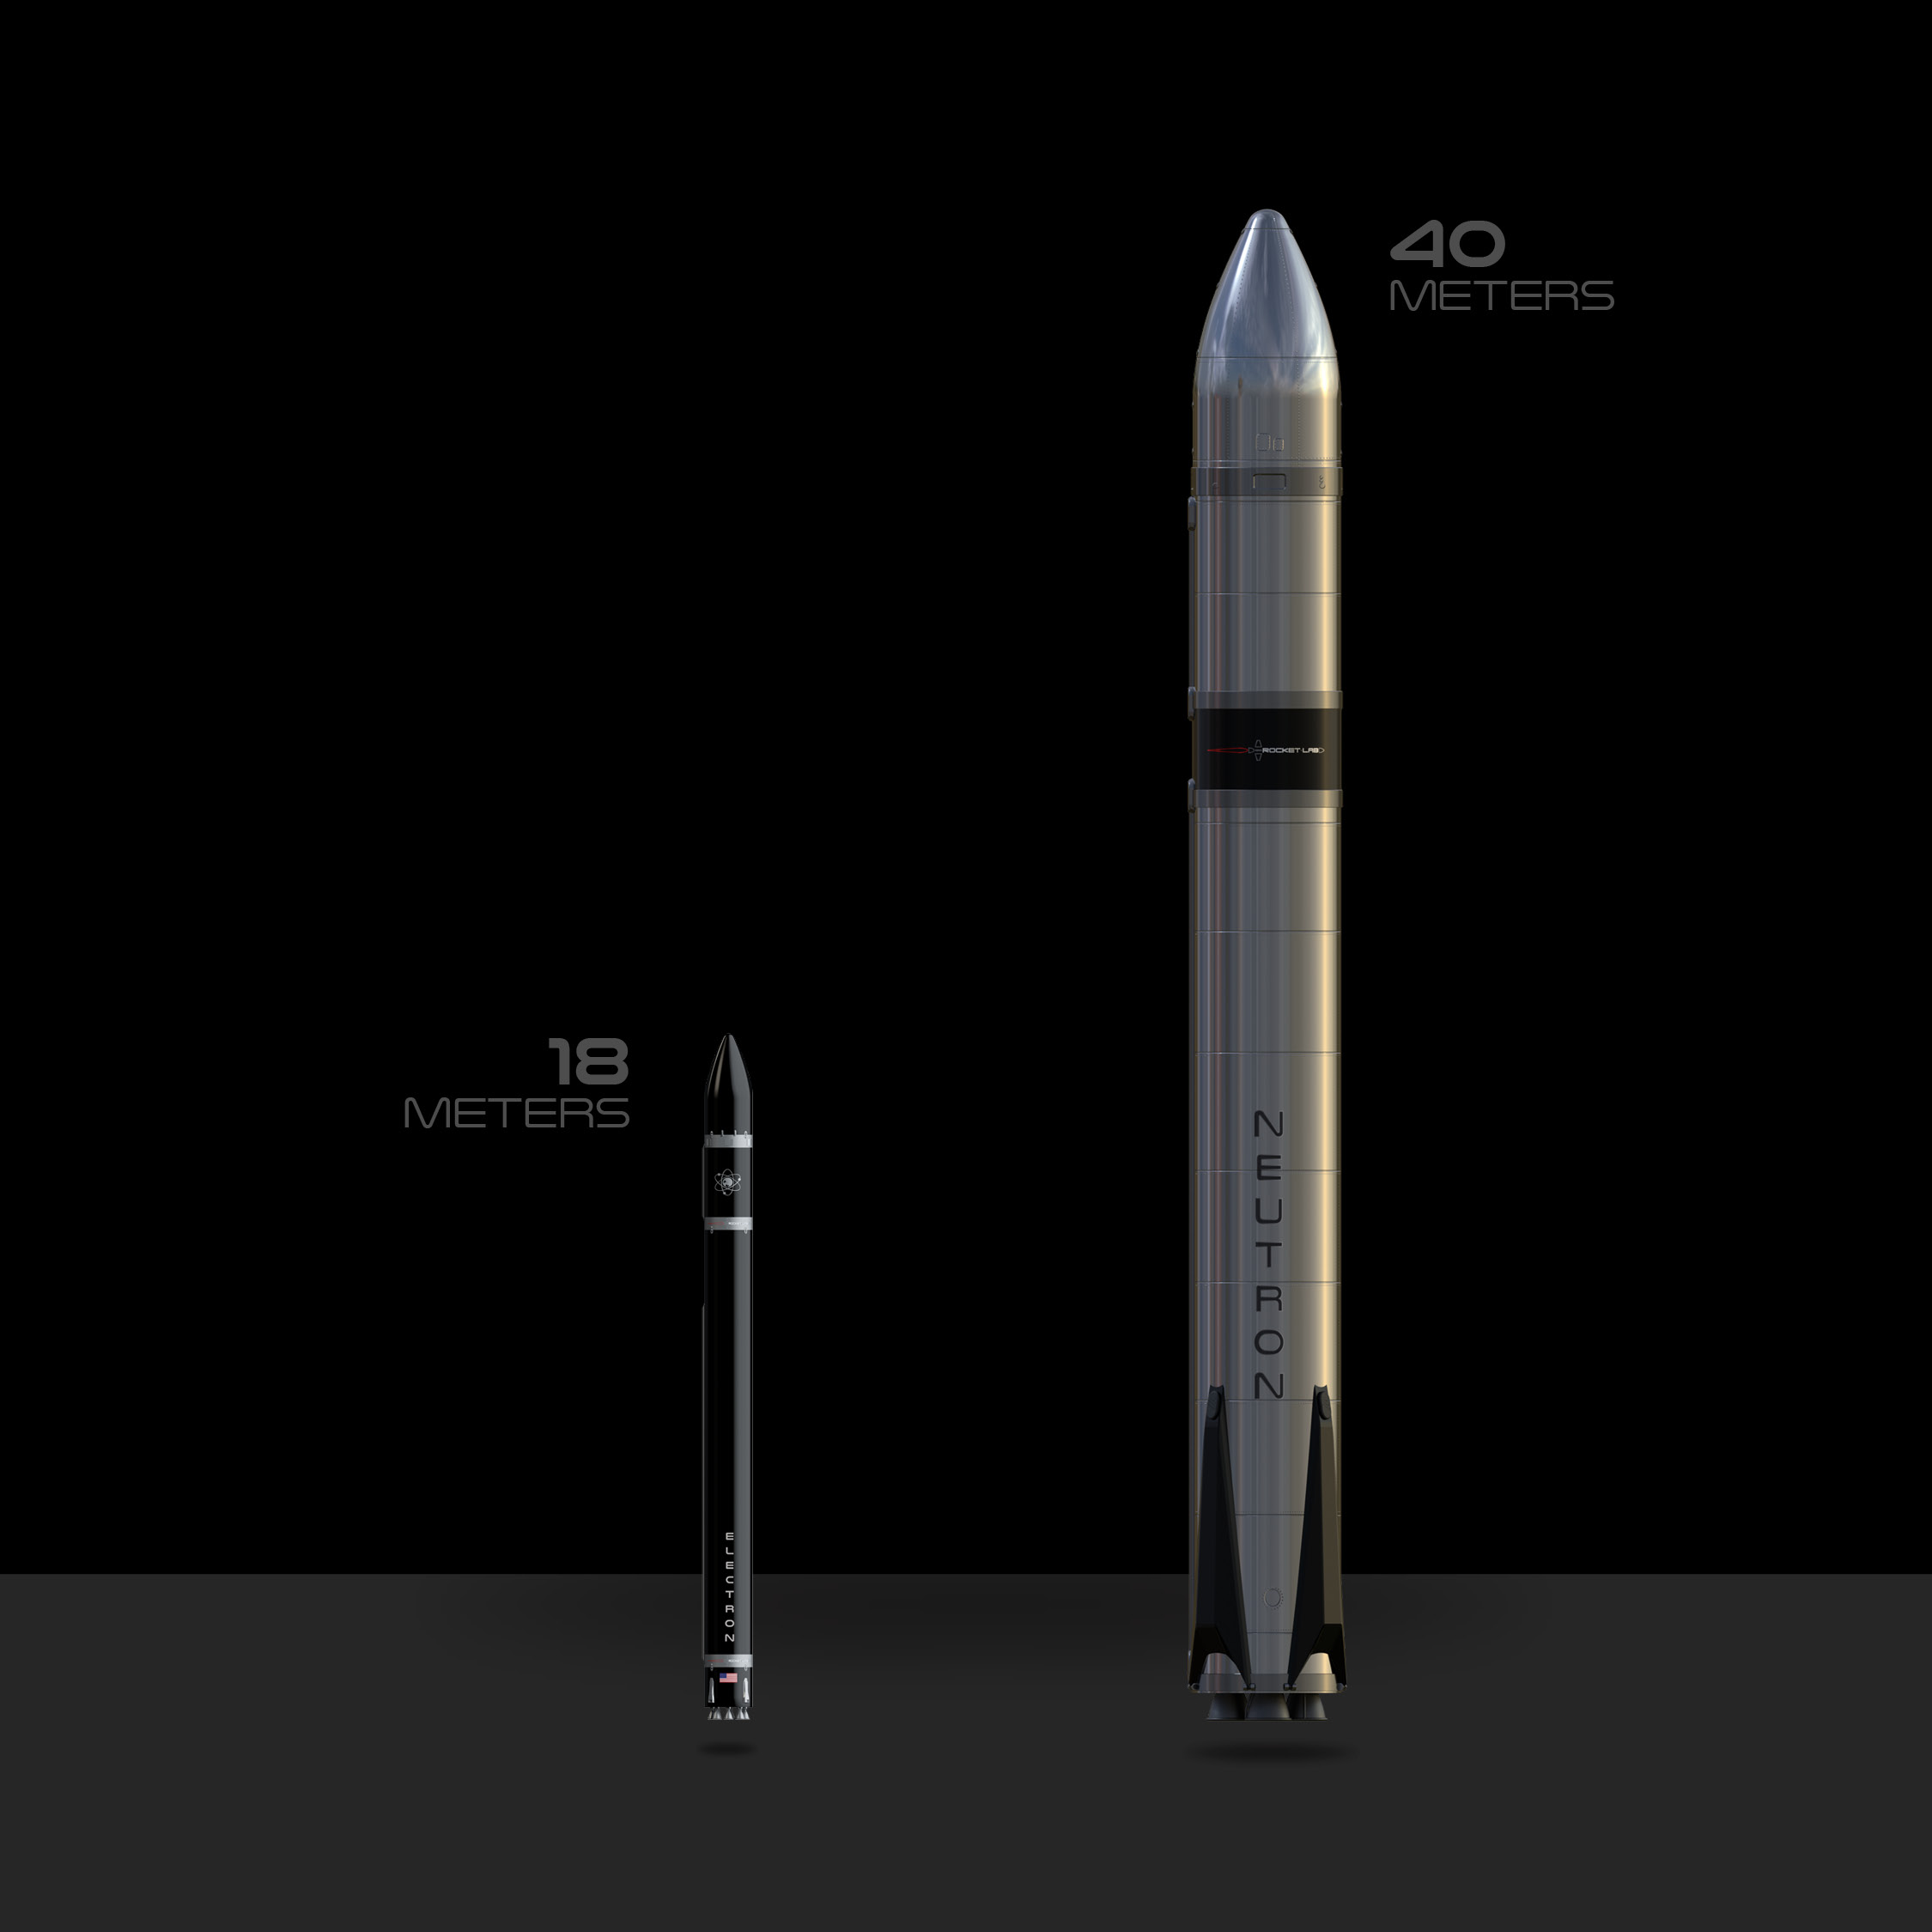 Left: Rocket Lab's Electron rocket and (right) its newly unveiled Neutron rocket. Image via Rocket Lab.